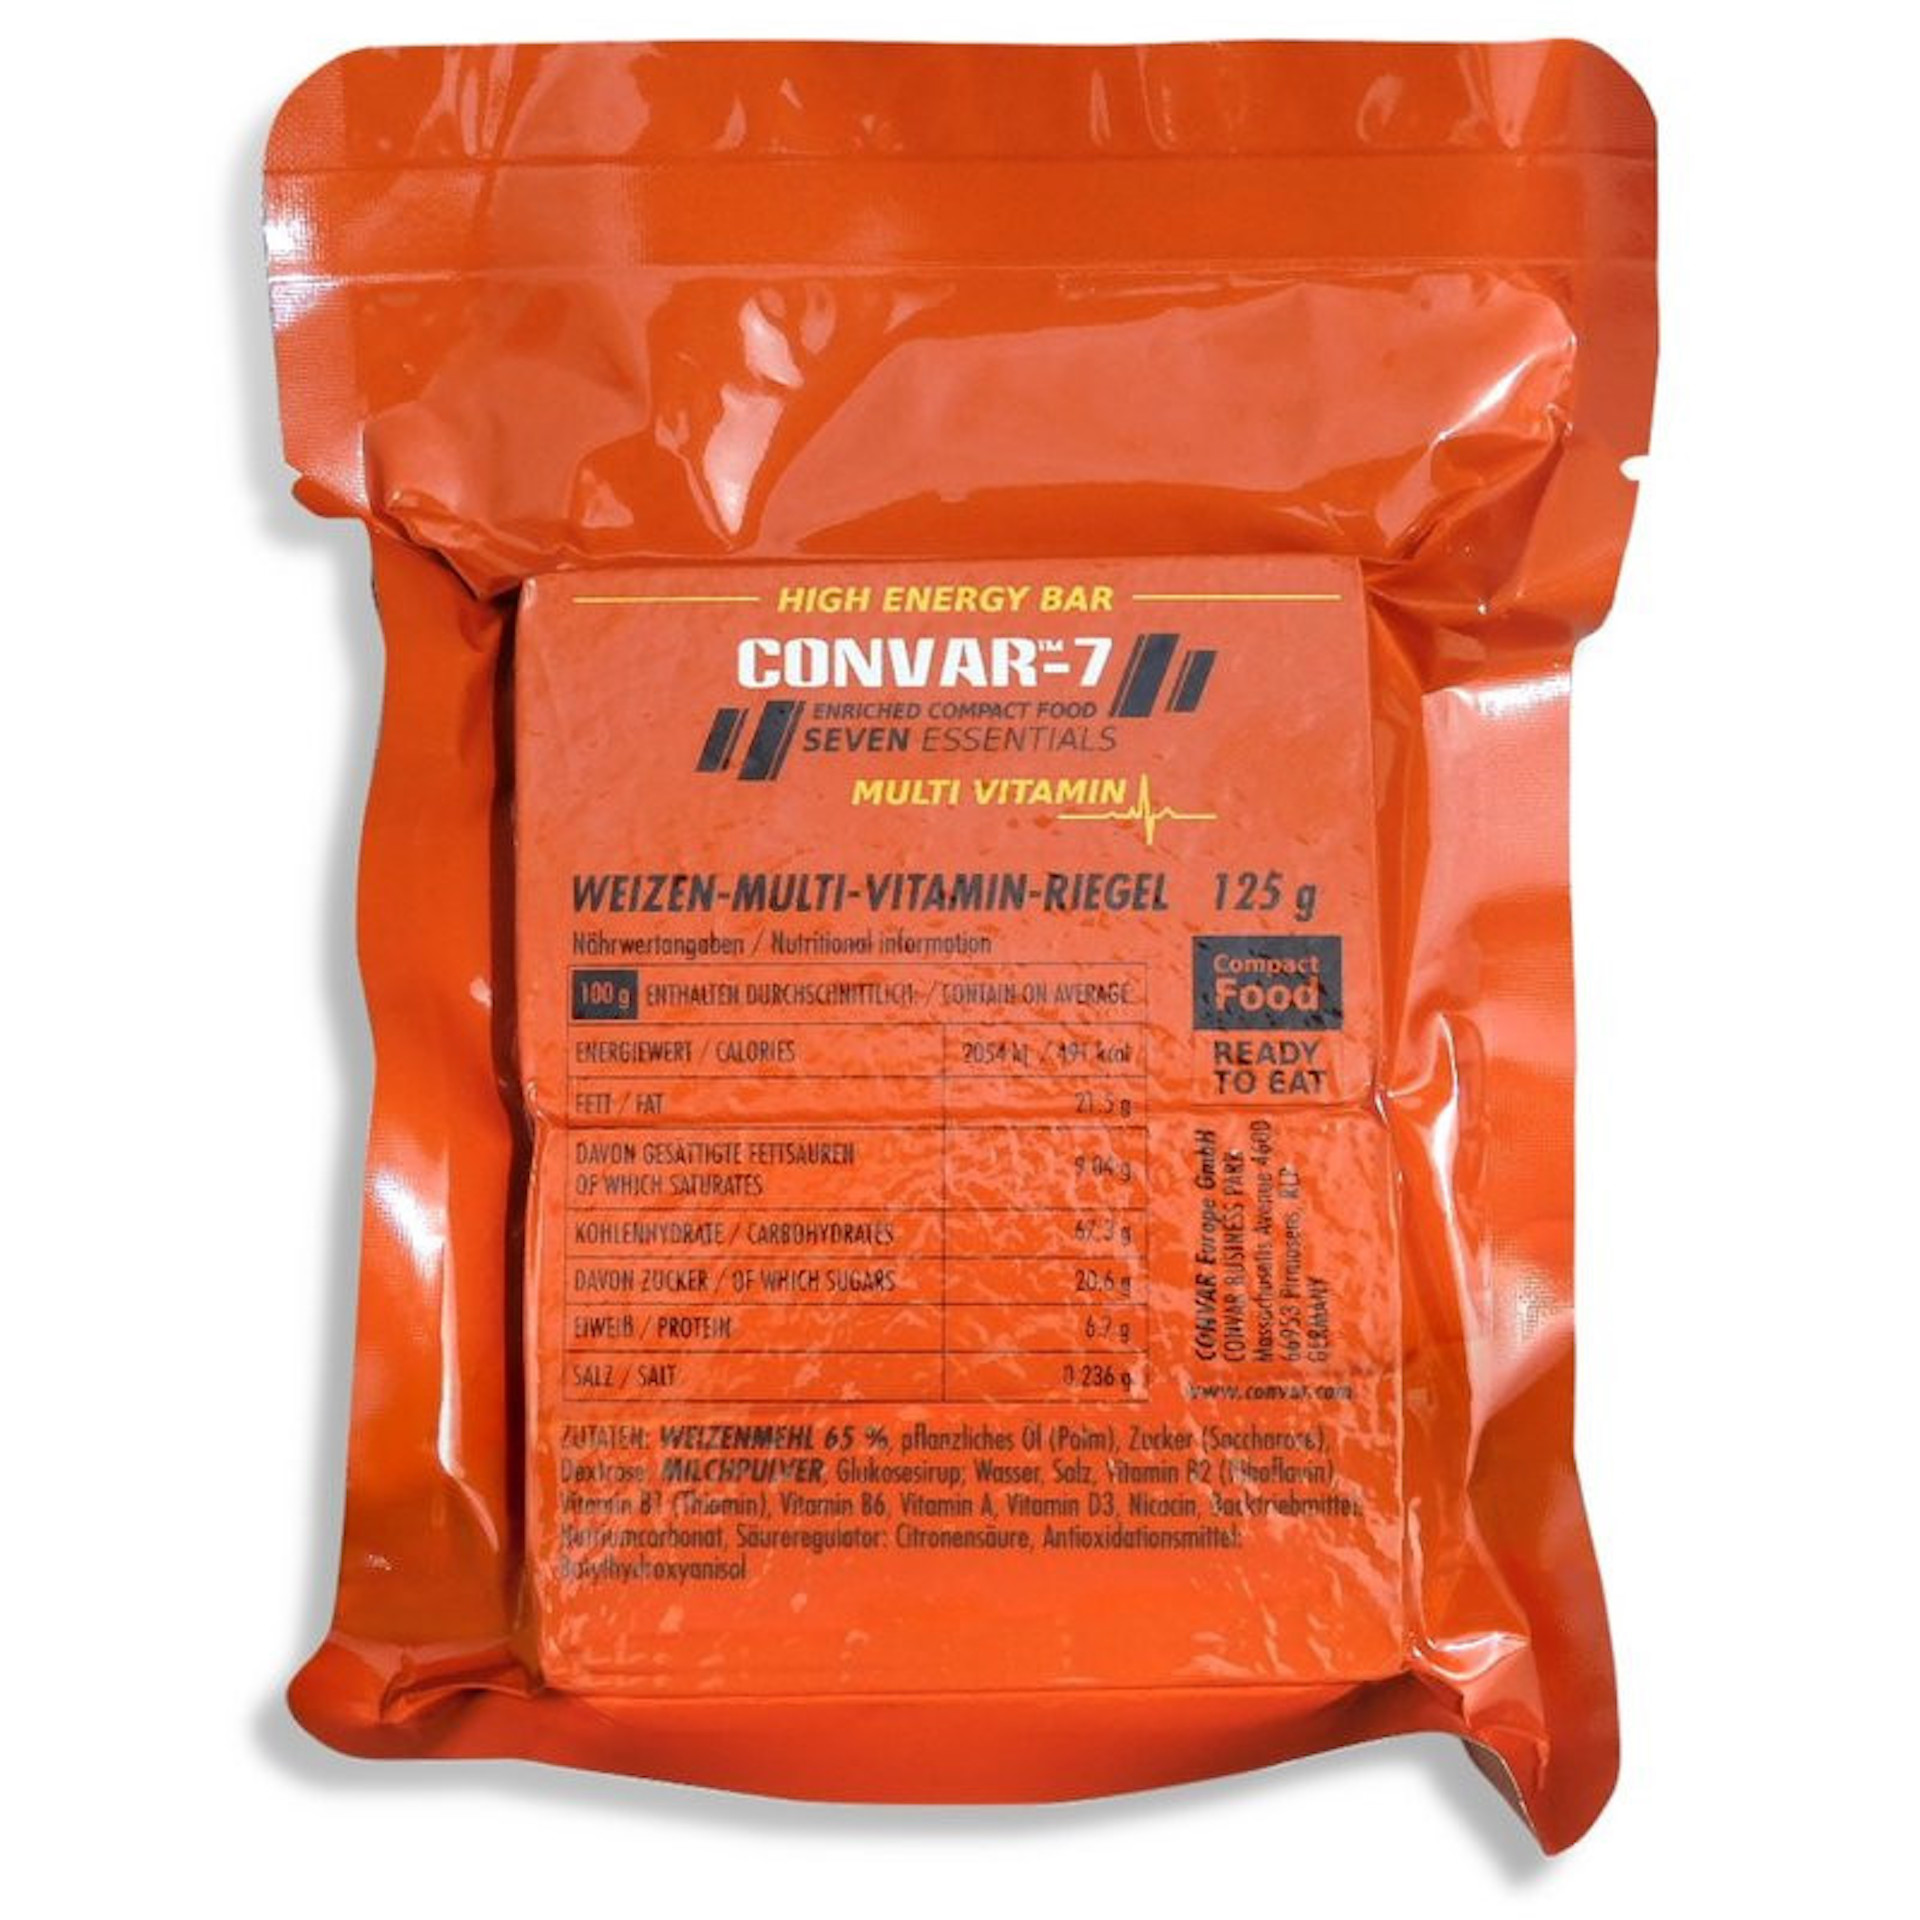 CONVAR-7 High Energy Bar - Multi Vitamin